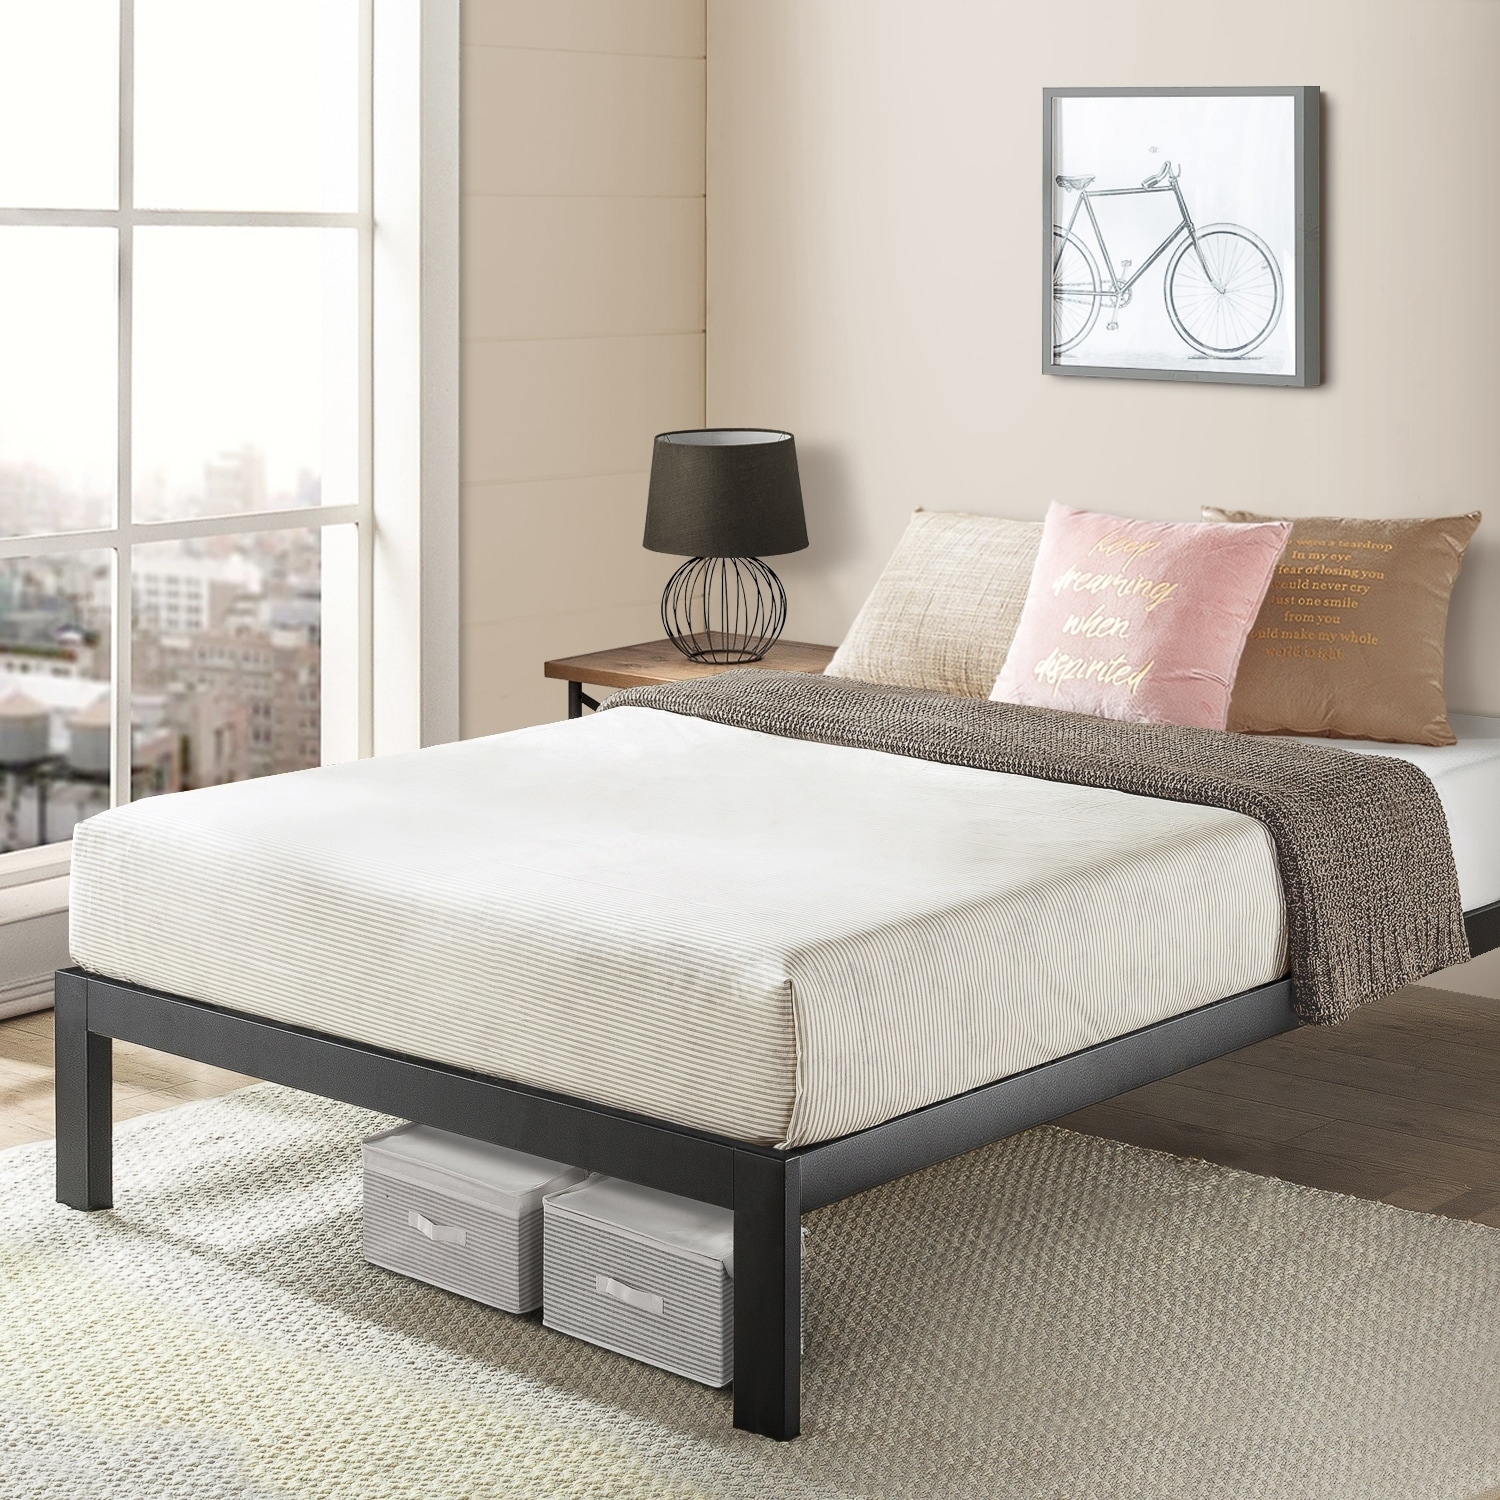 Platform Series Titan C Black Steel Slats California King Bed Frame On Sale Overstock 20859096